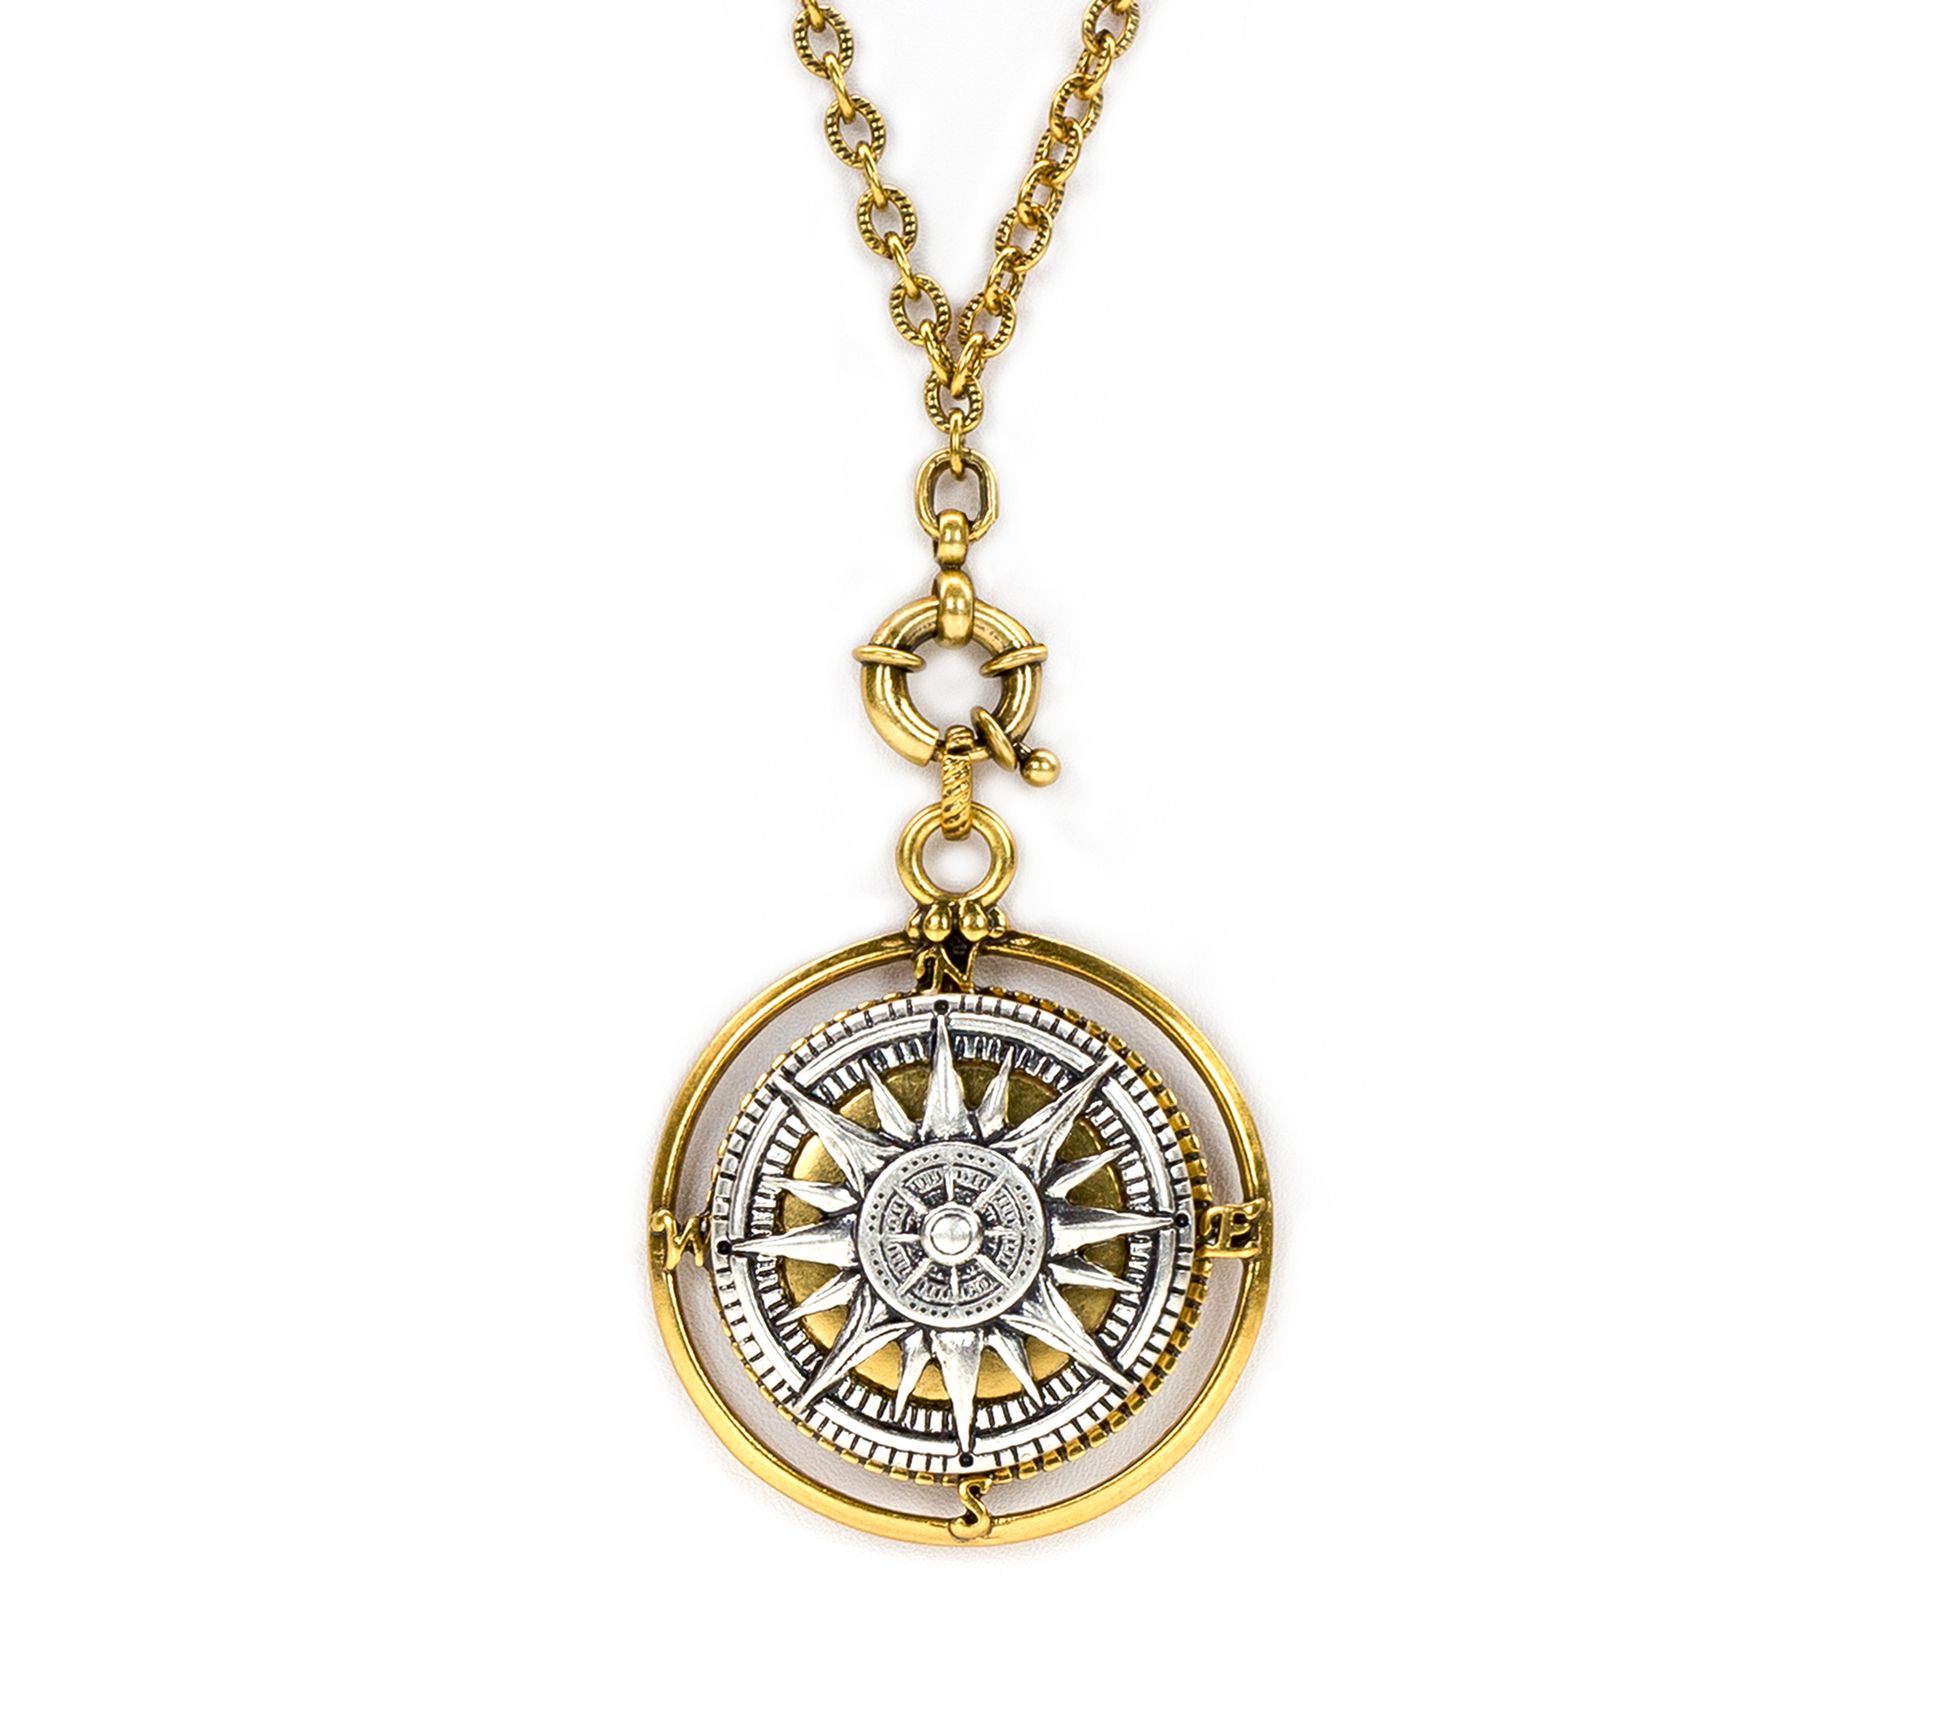 Golden pendant with compass motif